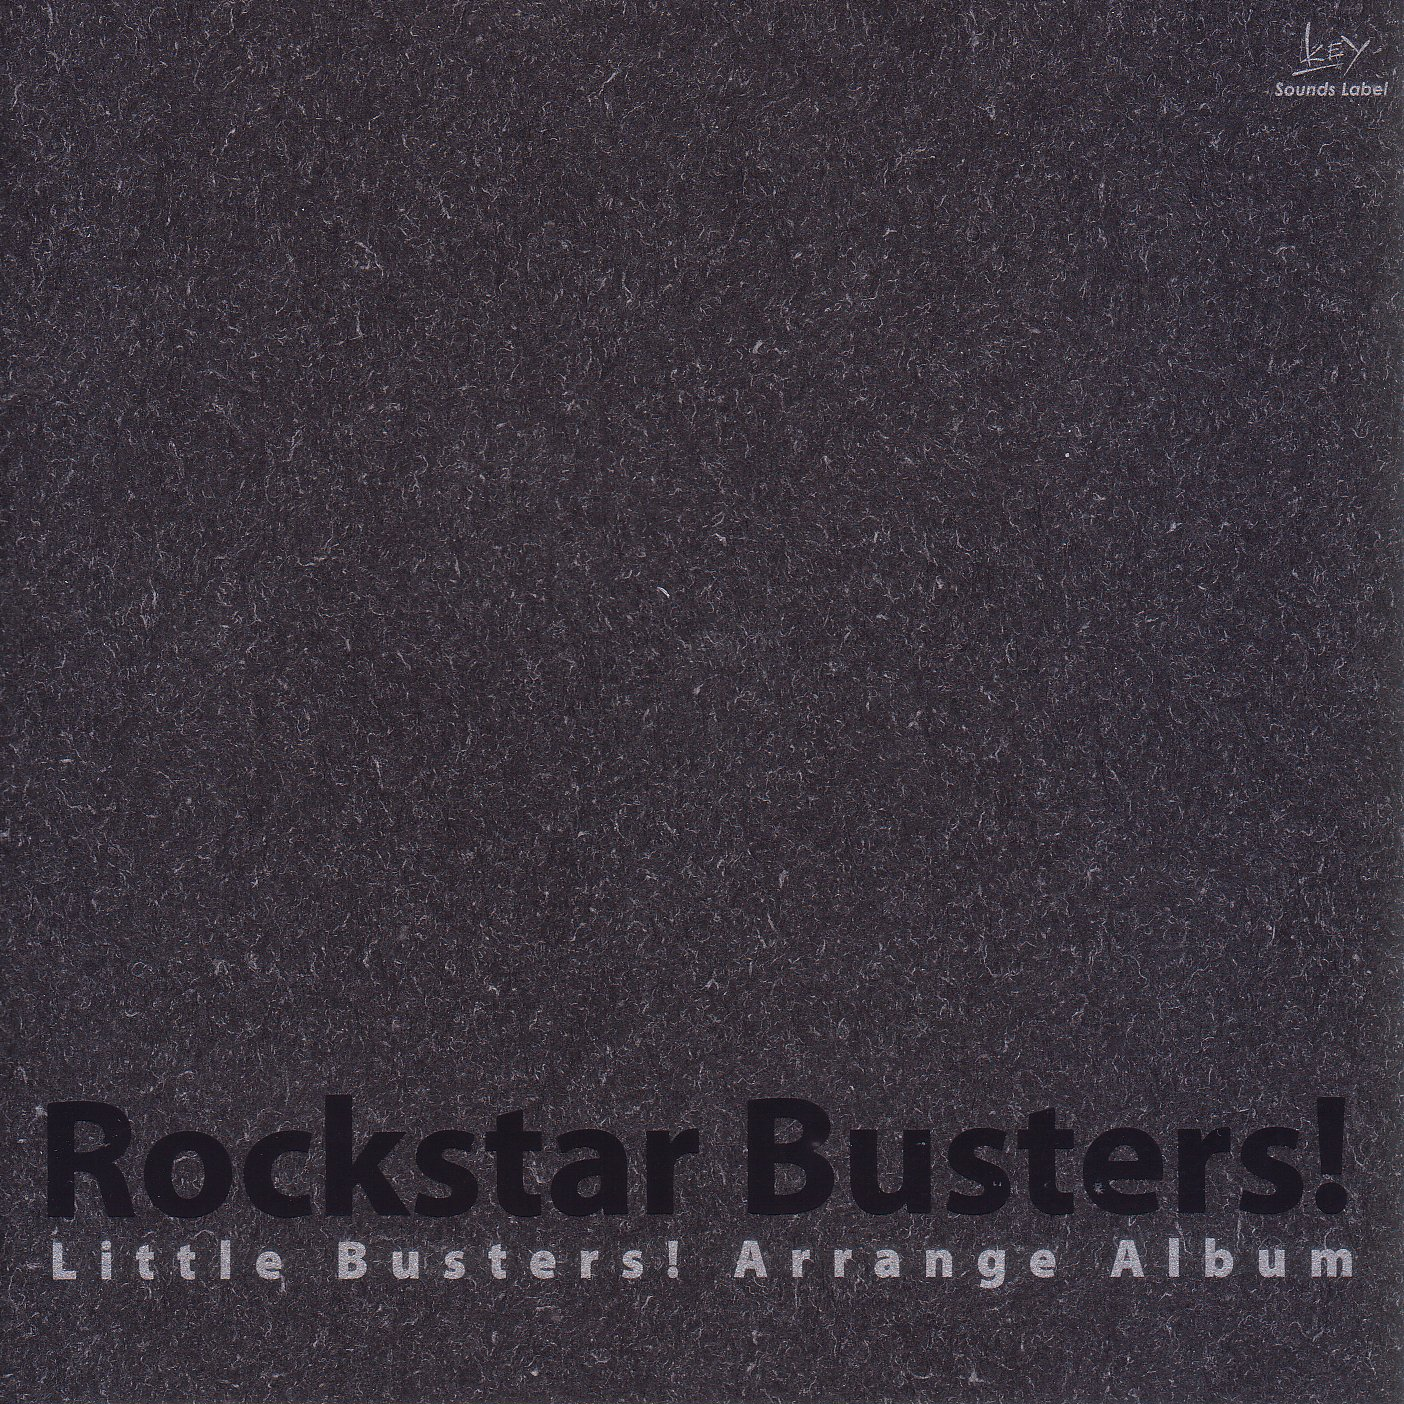 Rockstar Busters! Little Busters! Arrange Album